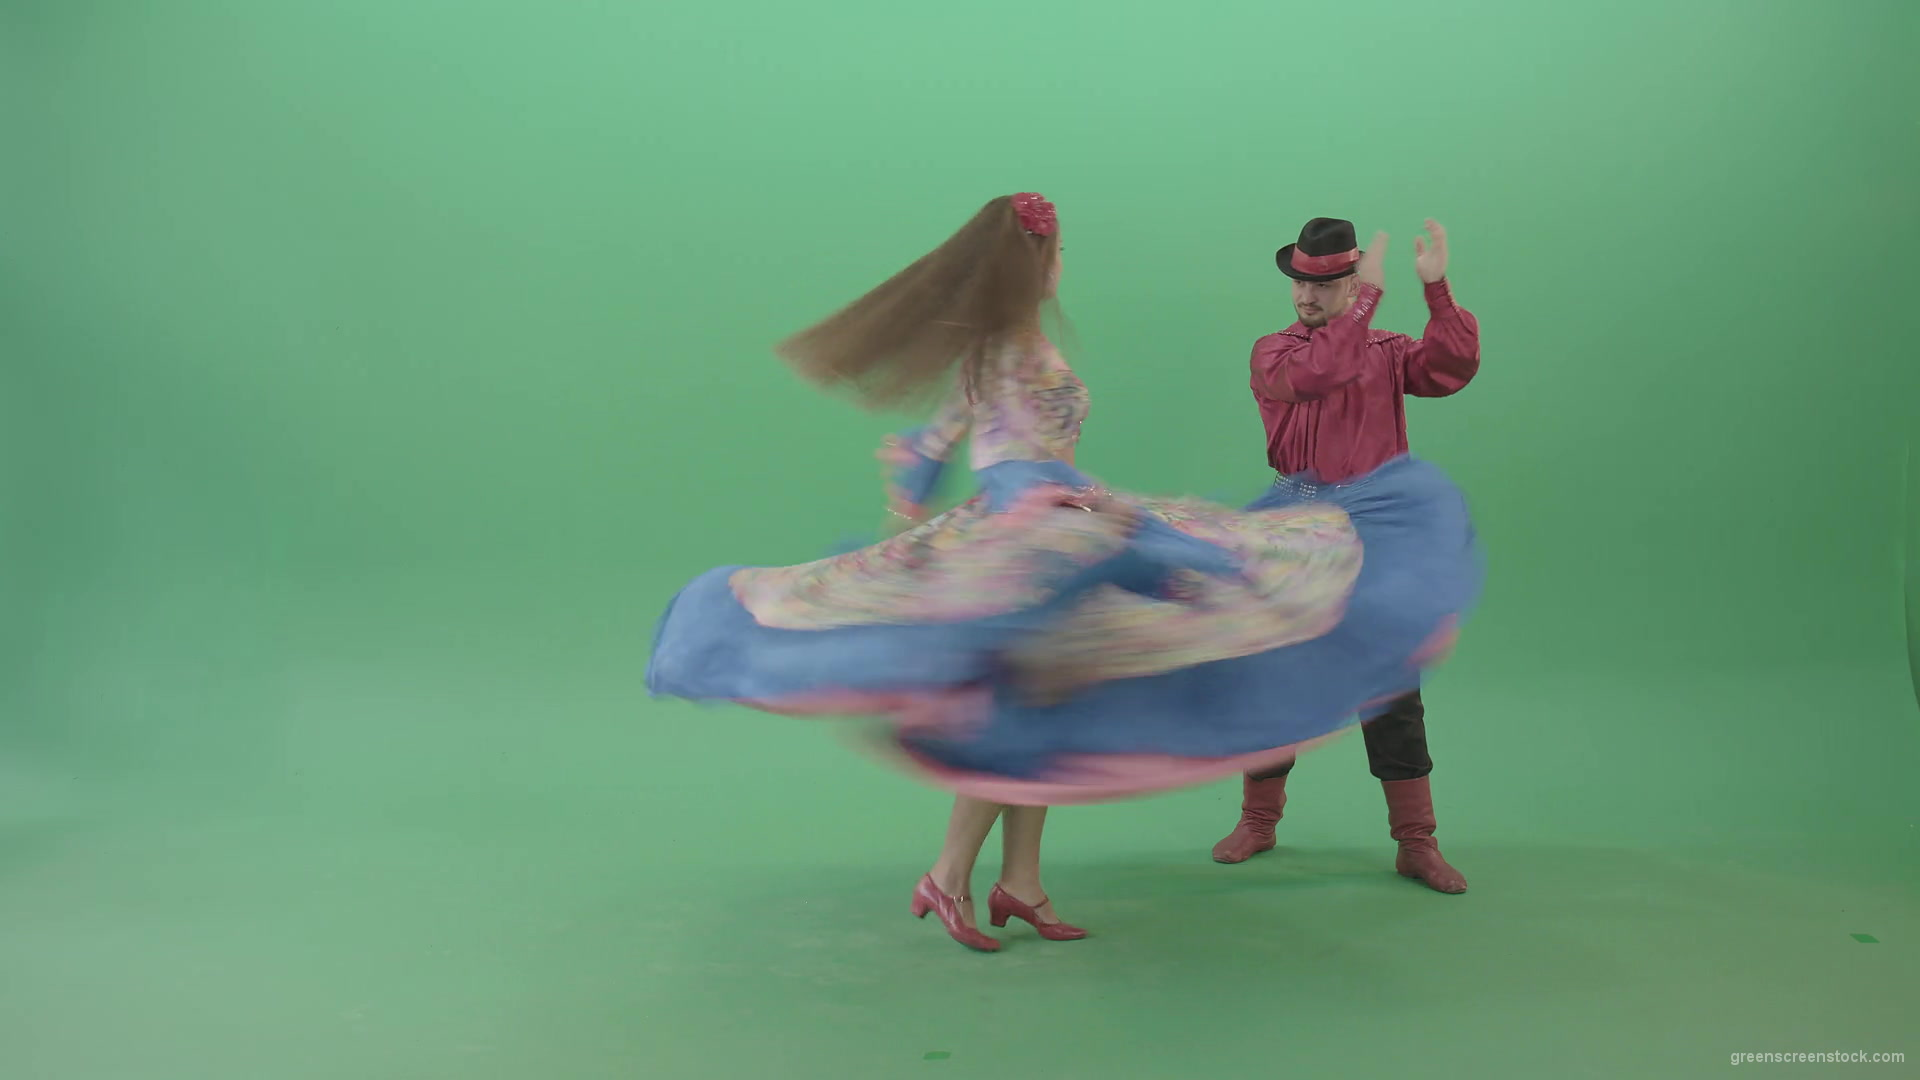 Balkan-couple-dance-hot-folk-dance-in-gypsy-comstumes-in-green-screen-studio-4K-Video-Footage-1920_009 Green Screen Stock